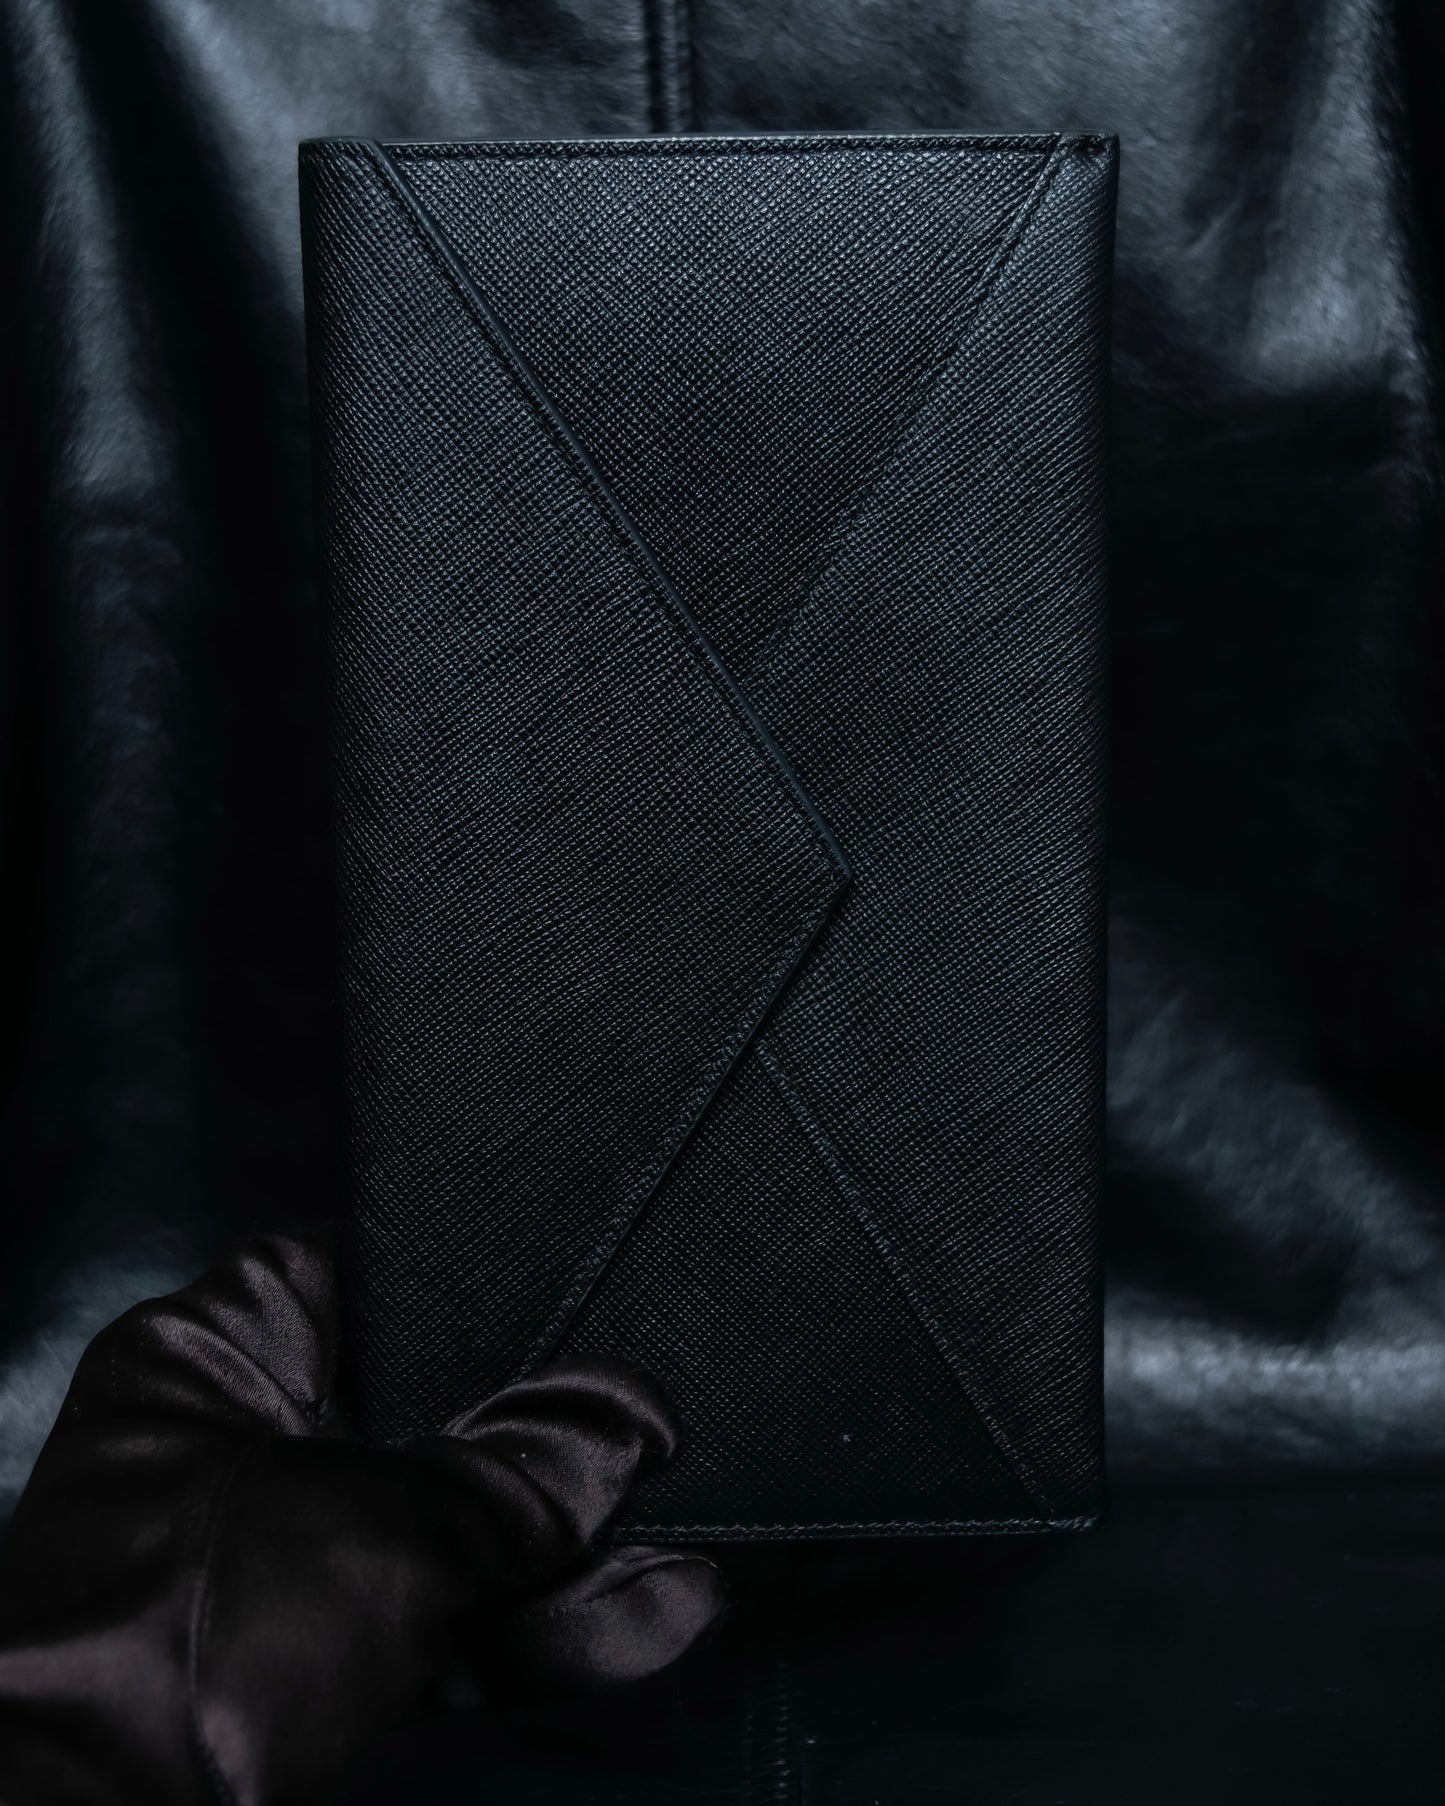 “PRADA” Letter shape gold lining leather Document Case